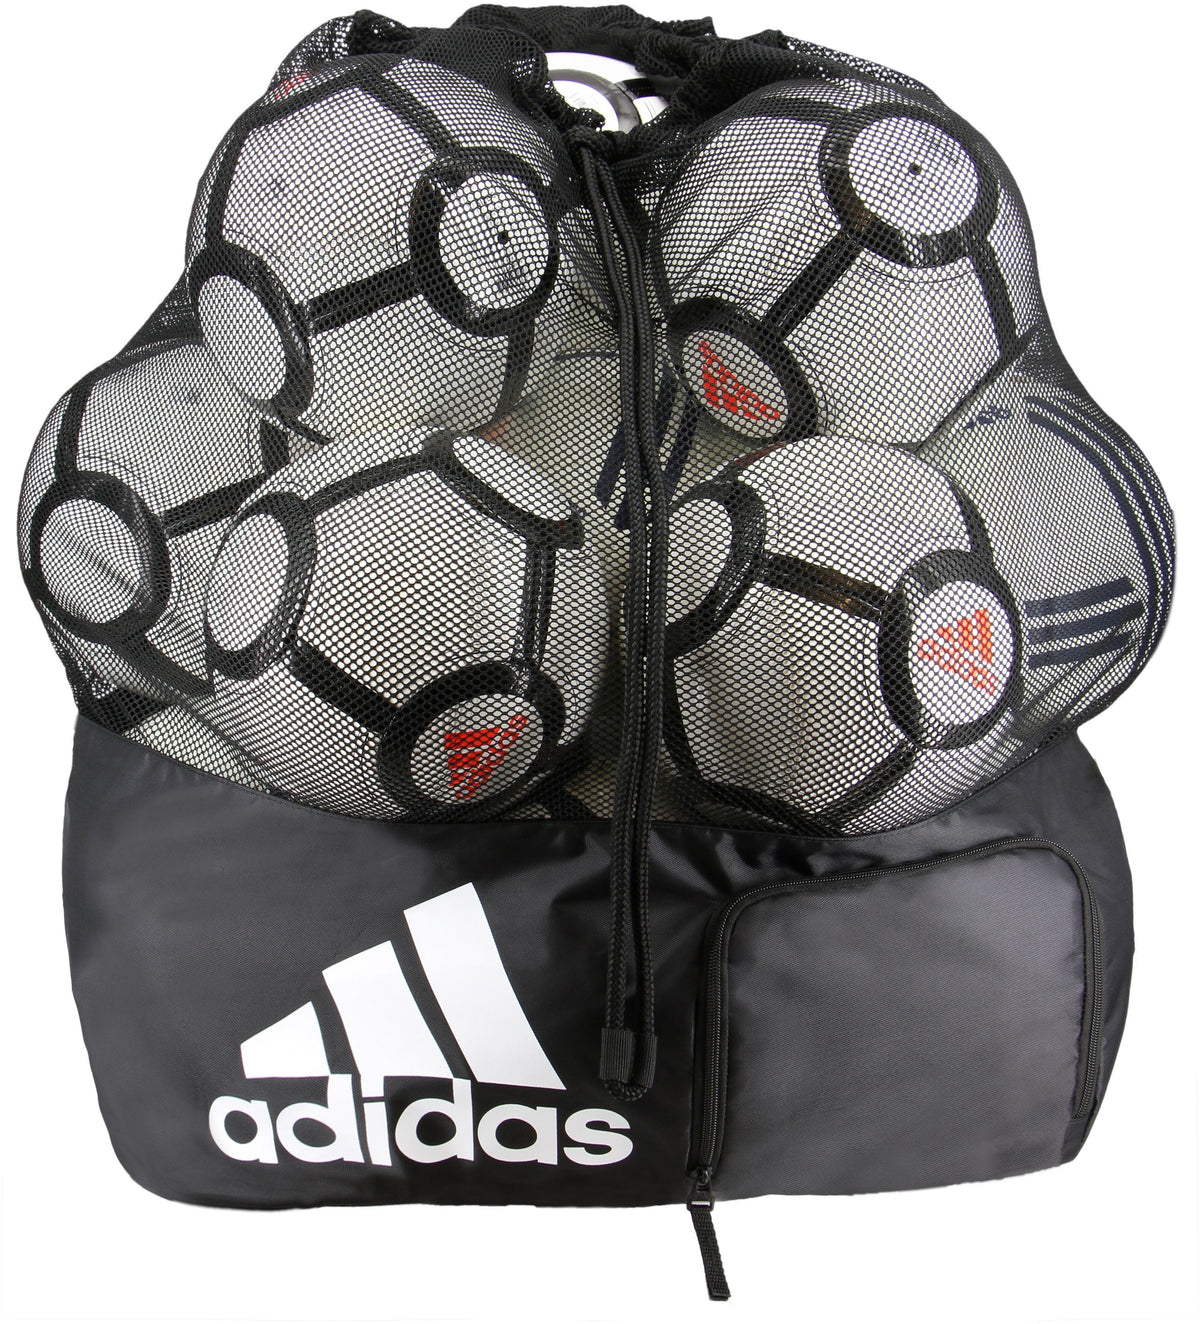 adidas Stadium Ball Bag | 5143954 Accessories adidas 